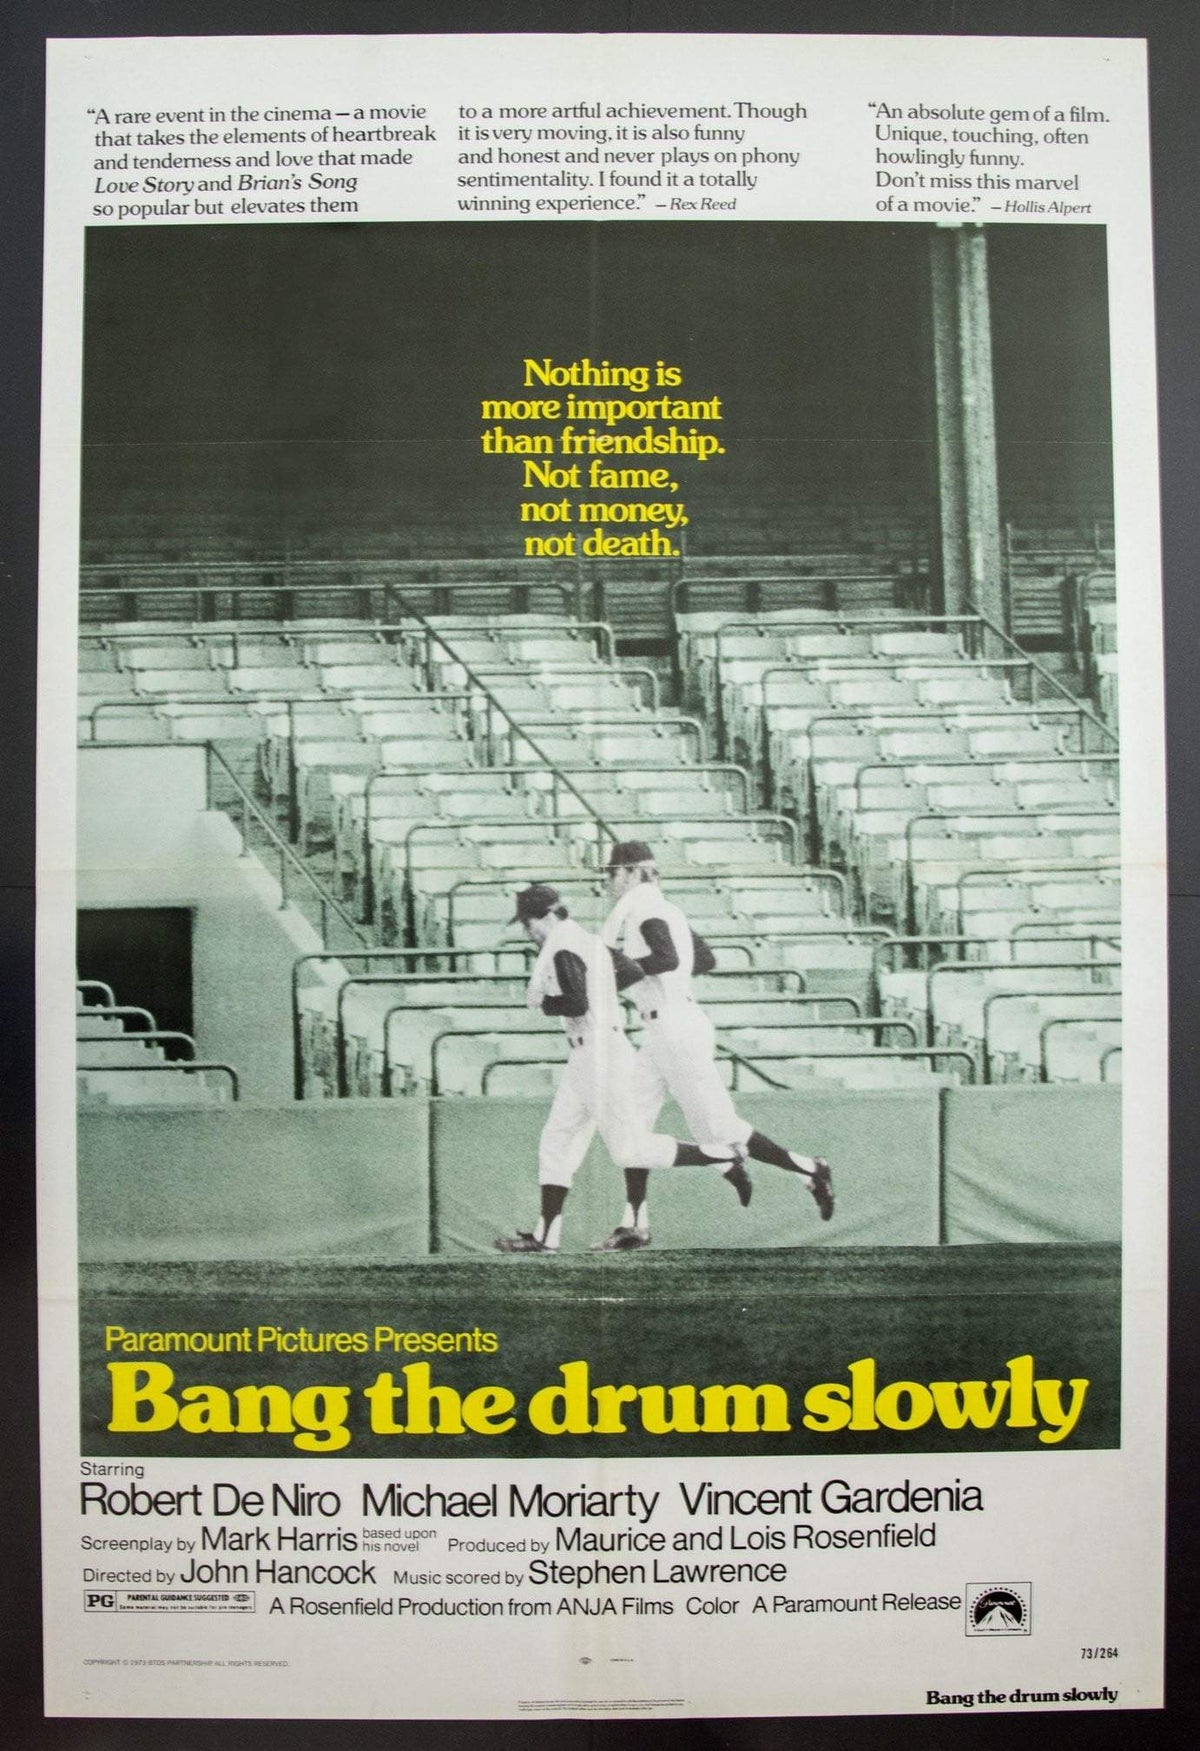 Bang the Drum Slowly (1973) original movie poster for sale at Original Film Art